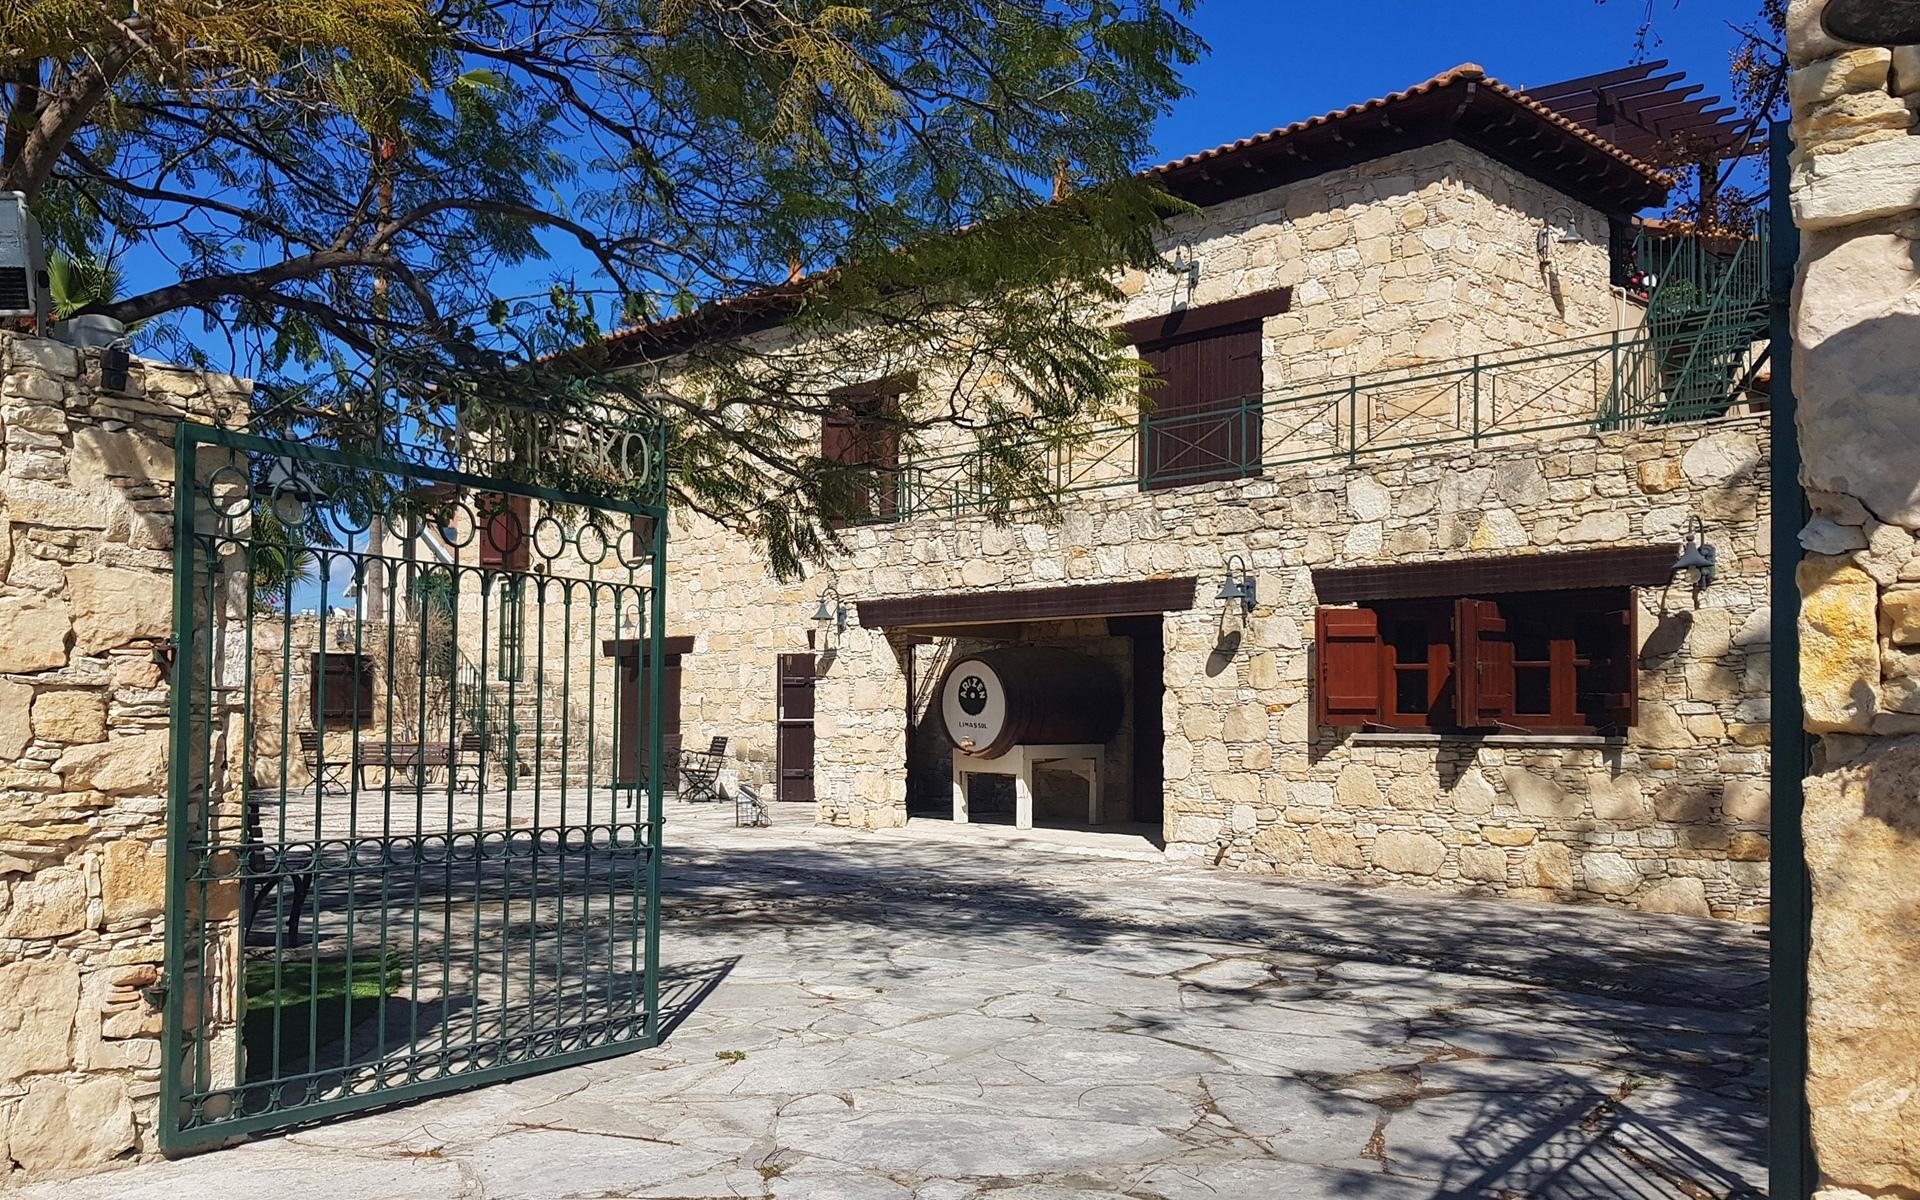 Cyprus Wine Museum in Cyprus